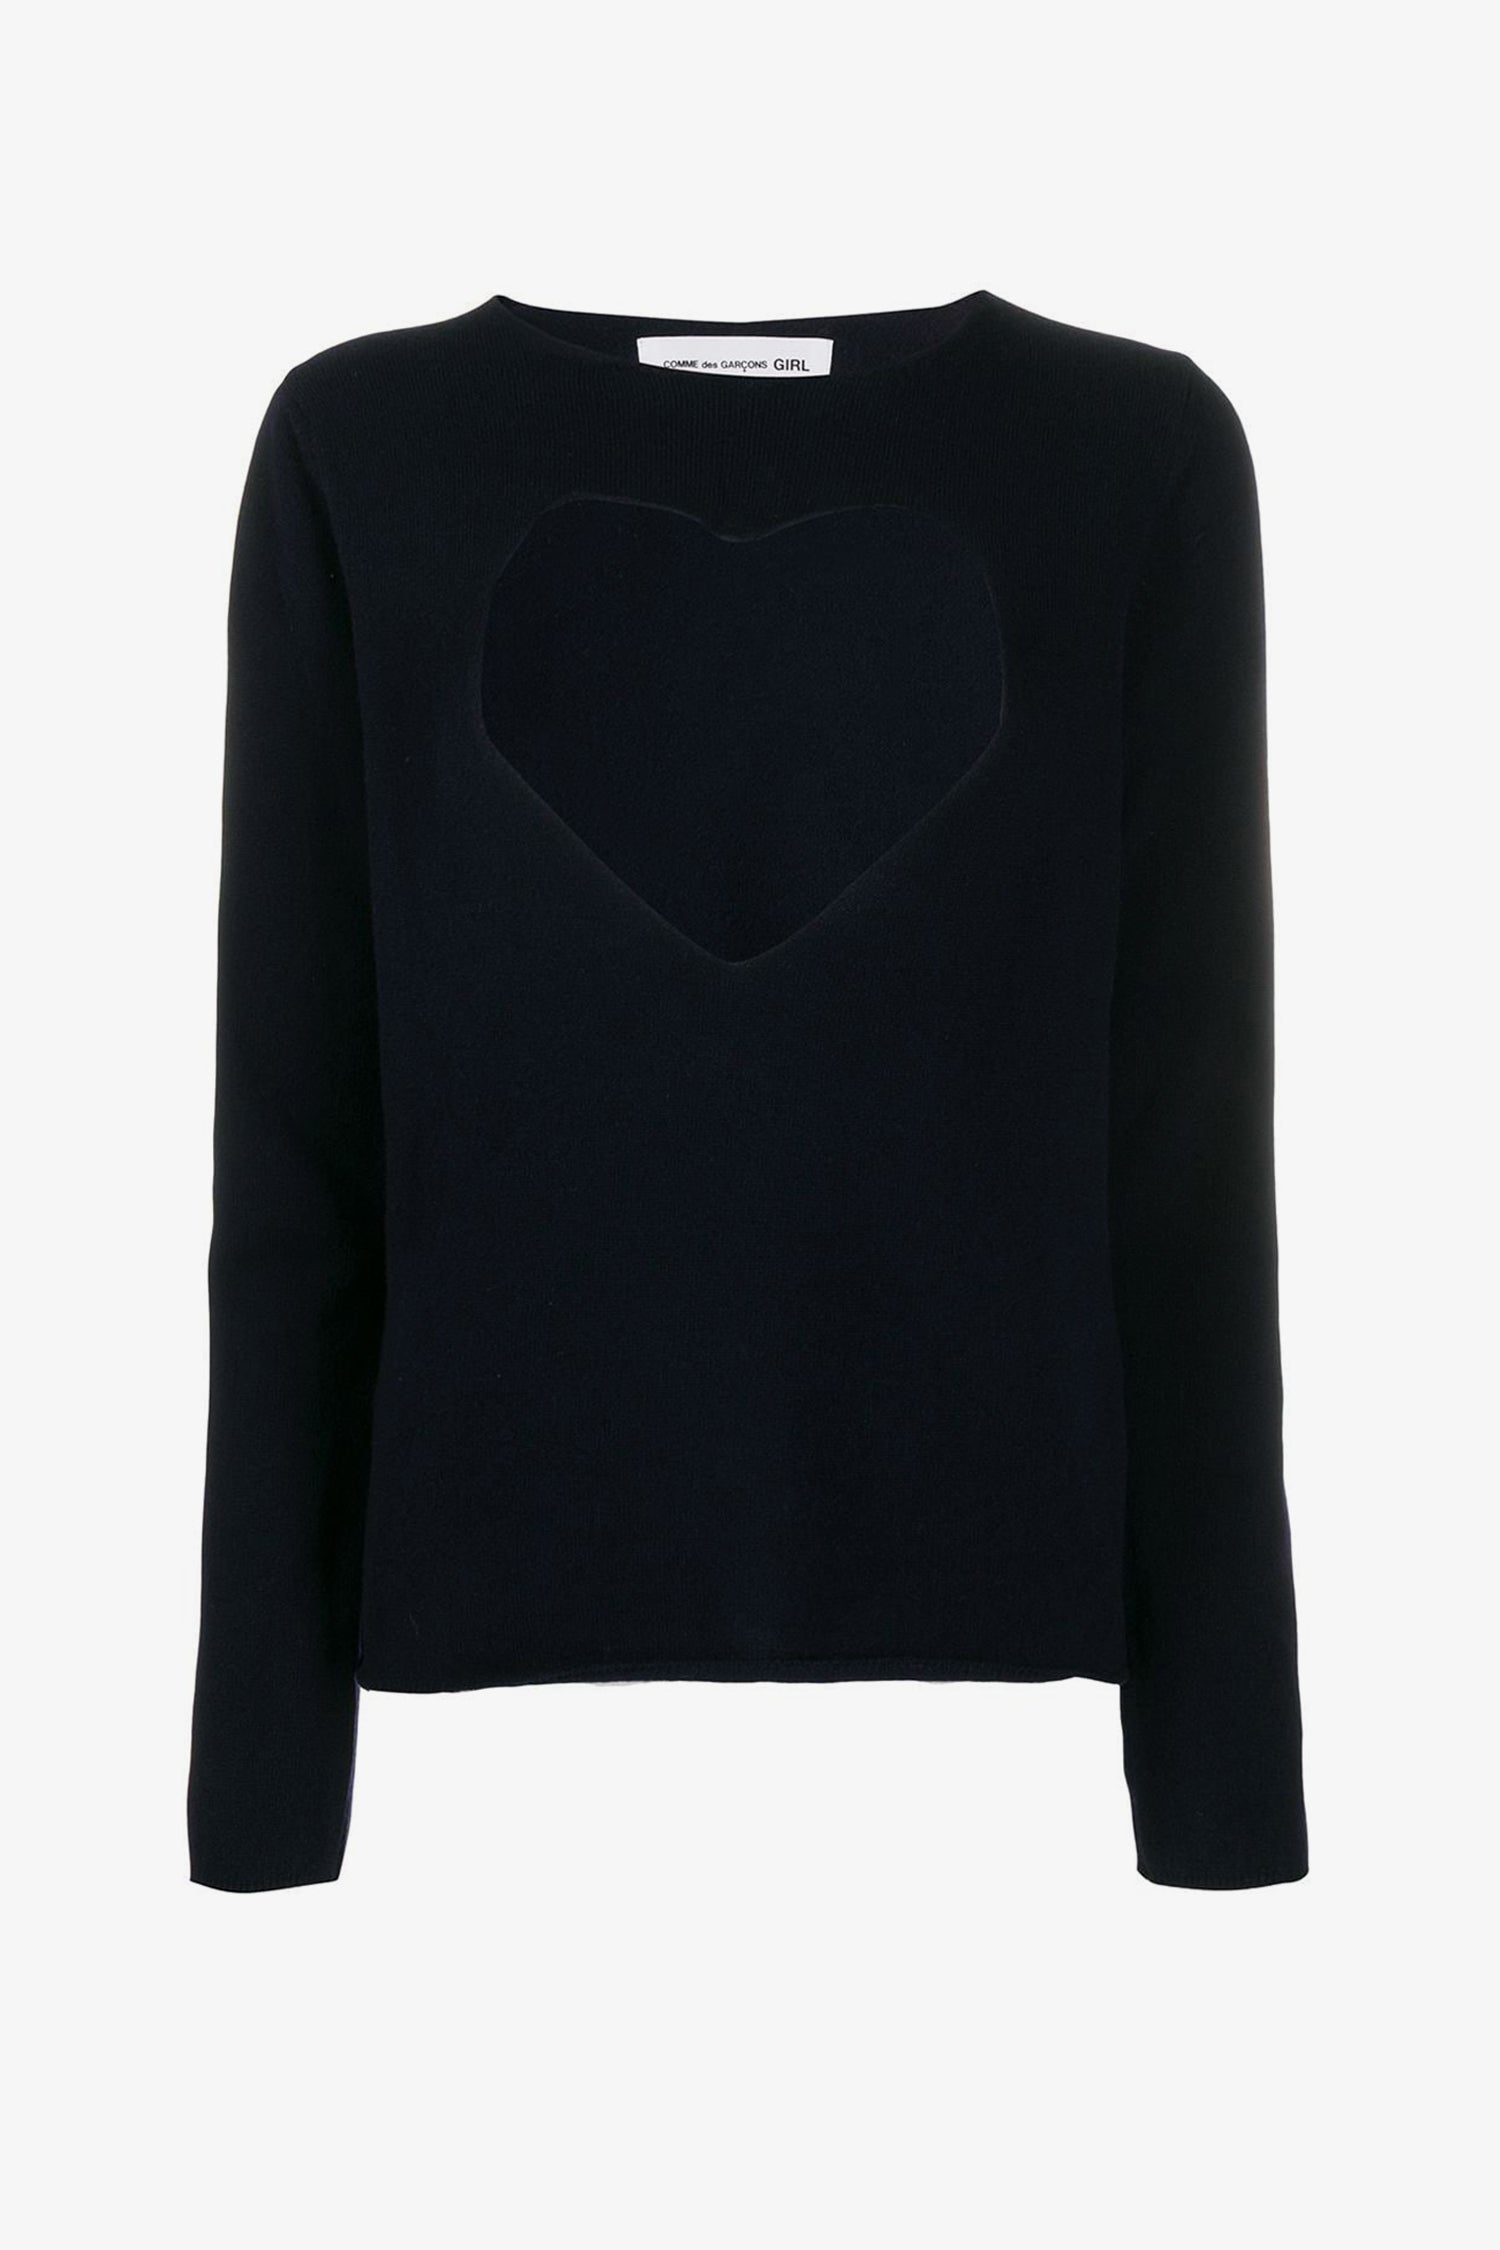 Selectshop FRAME - COMME DES GARÇONS GIRL Cut-Out Heart Wool Sweater Sweatshirt Dubai